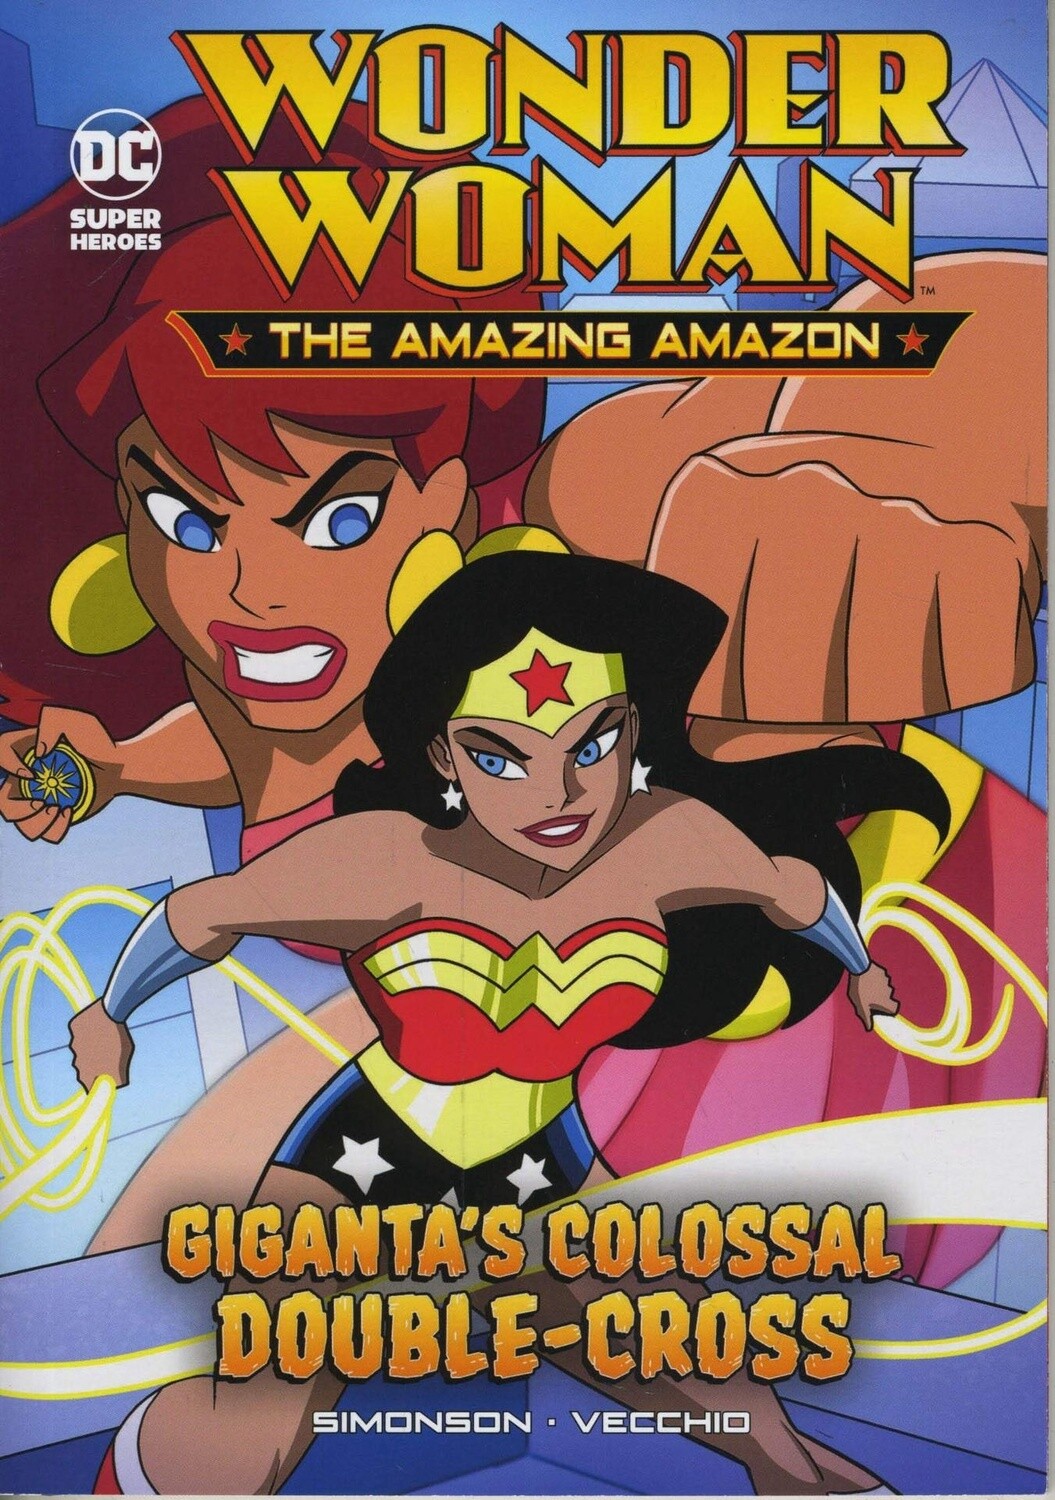 Wonder Woman: The Amazing Amazon: Giganta's Colossal Double-Cross